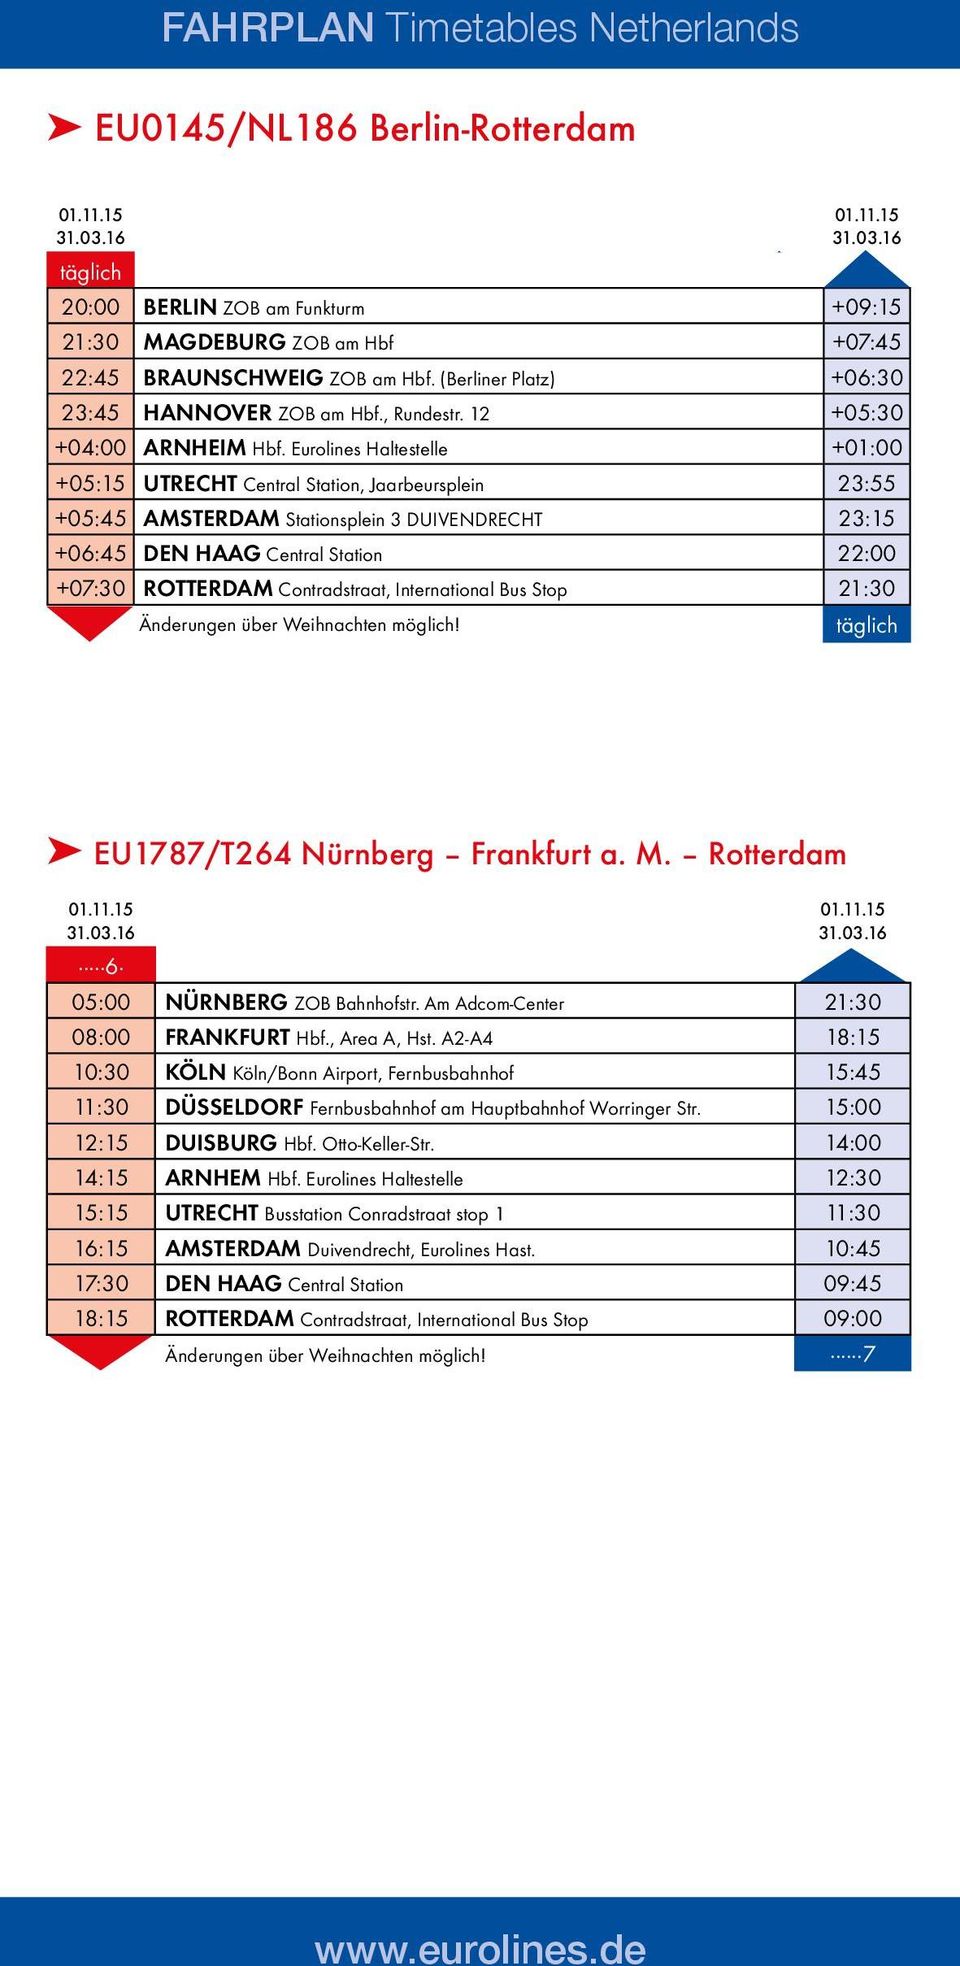 Eurolines Haltestelle +01:00 +05:15 utrecht Central Station, Jaarbeursplein 23:55 +05:45 AMSTERDAM Stationsplein 3 DUIVENDRECHT 23:15 +06:45 DEN HAAG Central Station 22:00 +07:30 rotterdam